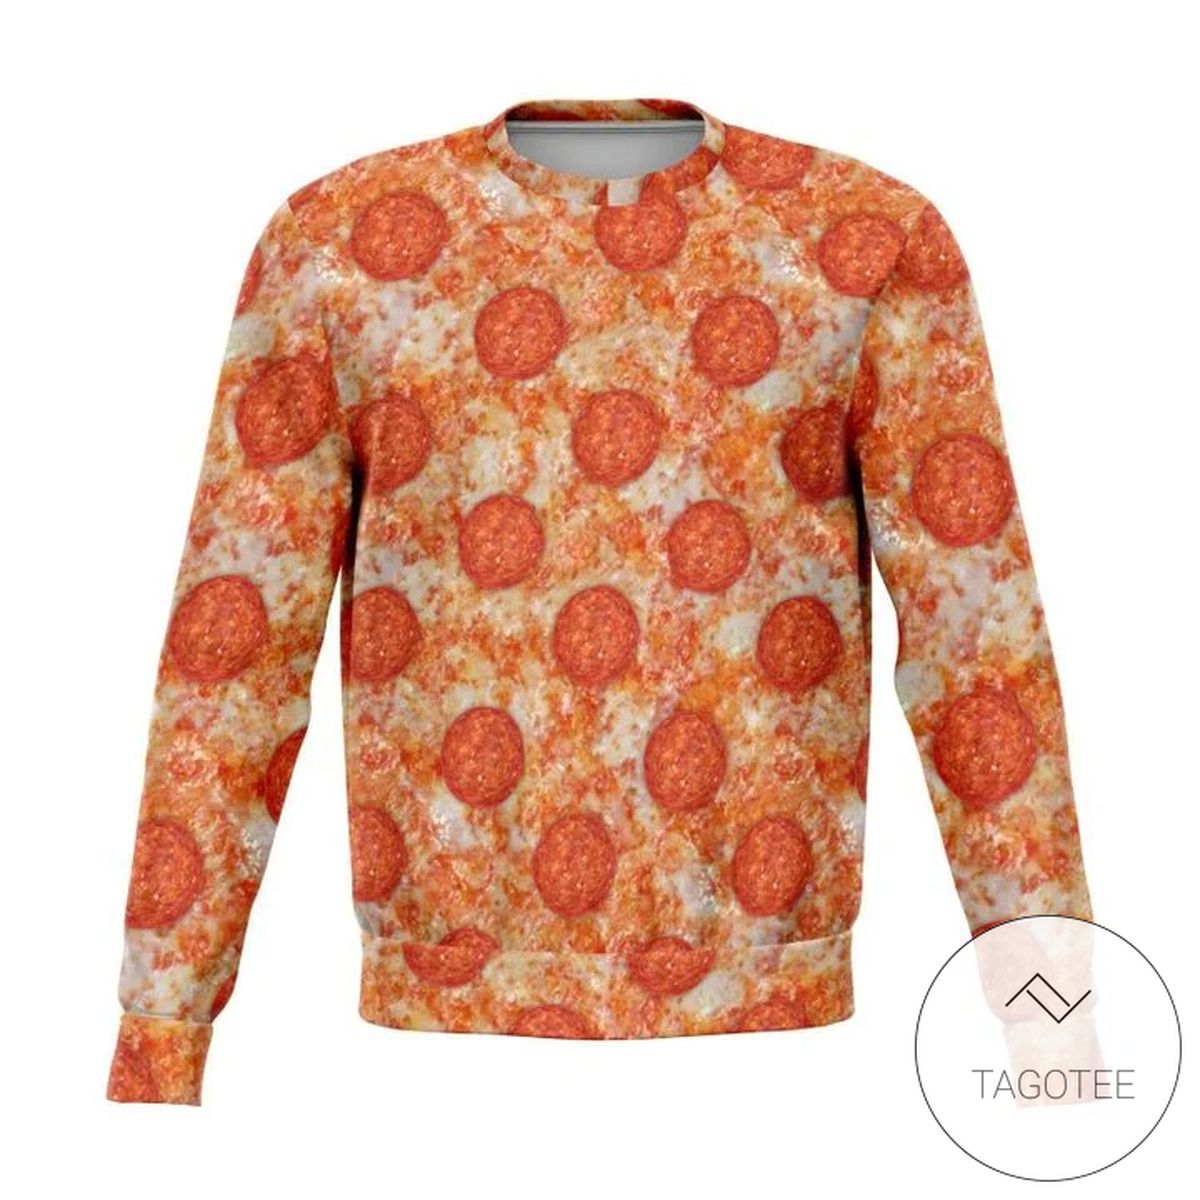 Pizza Pepperoni Sweatshirt Knitted Ugly Christmas Sweater